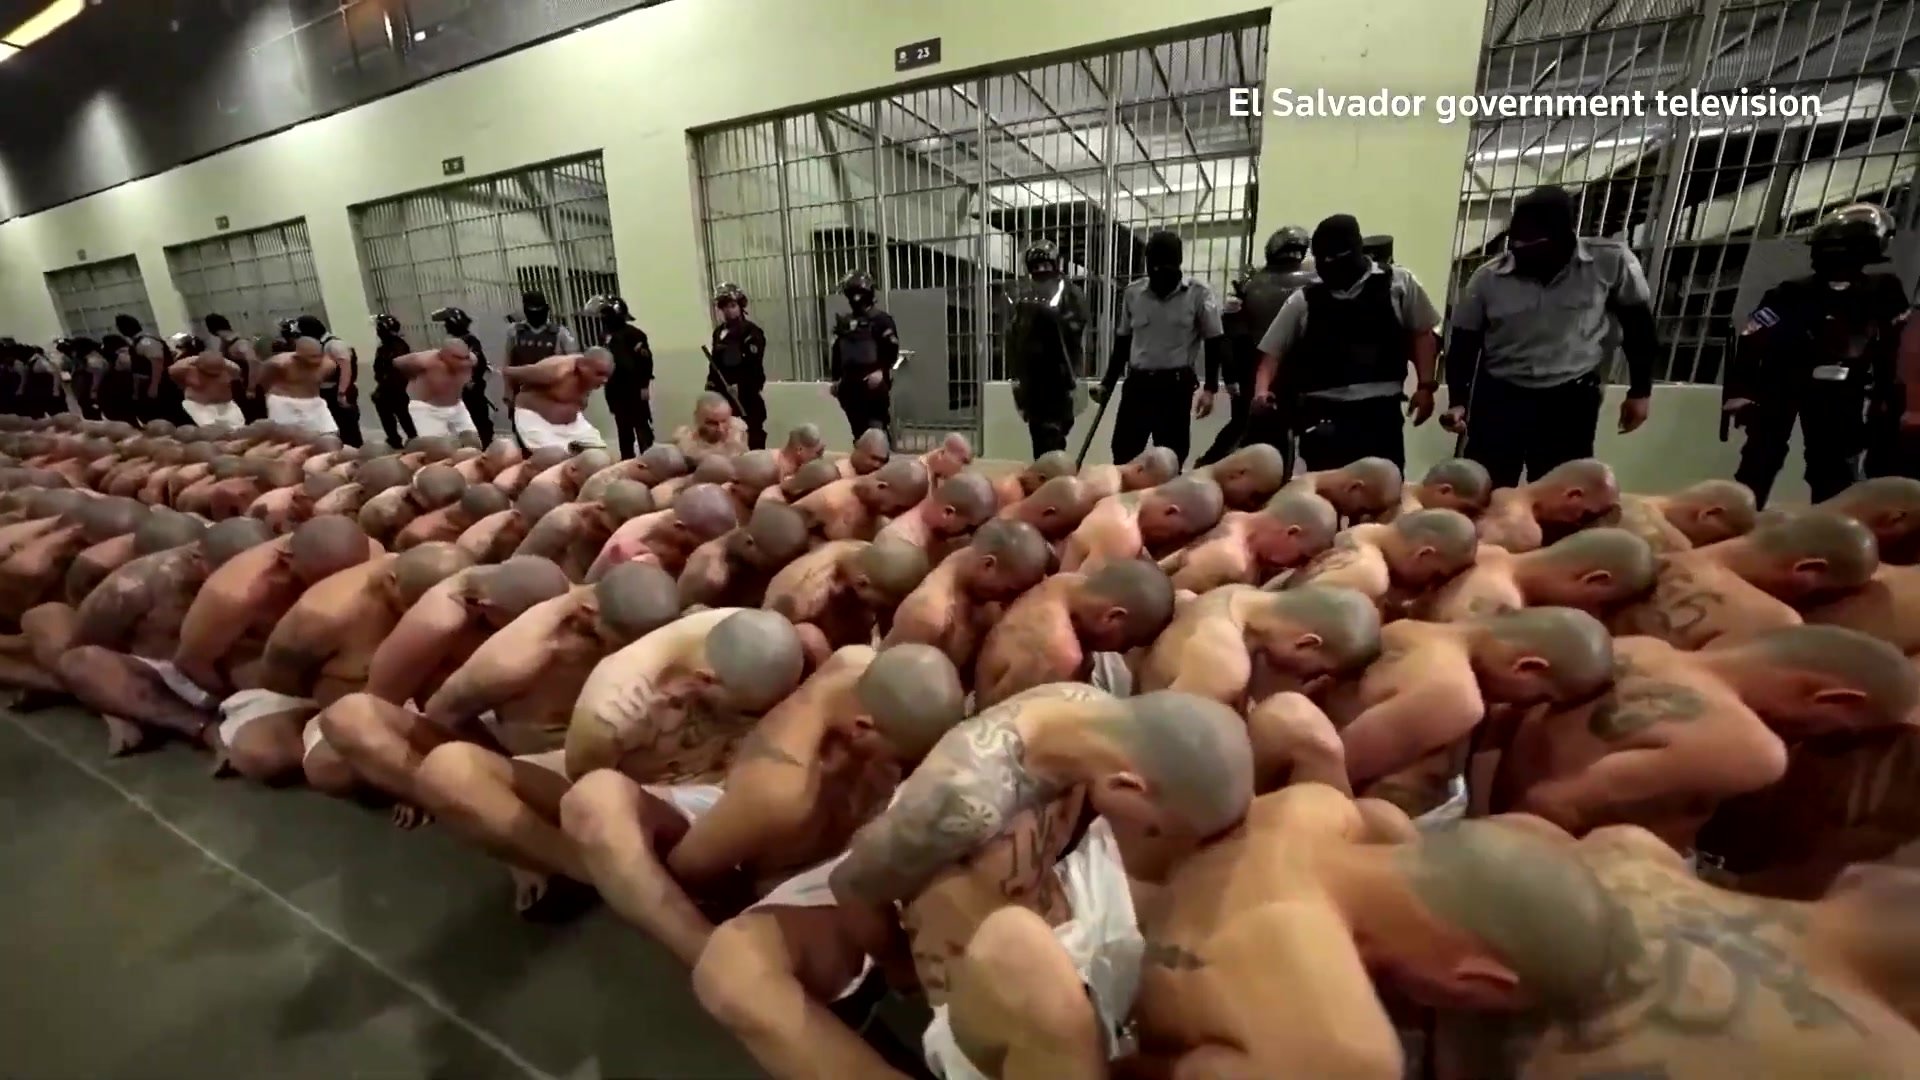 Mega Prison - REAL LIFE SUBMISSIVE PRISONERS